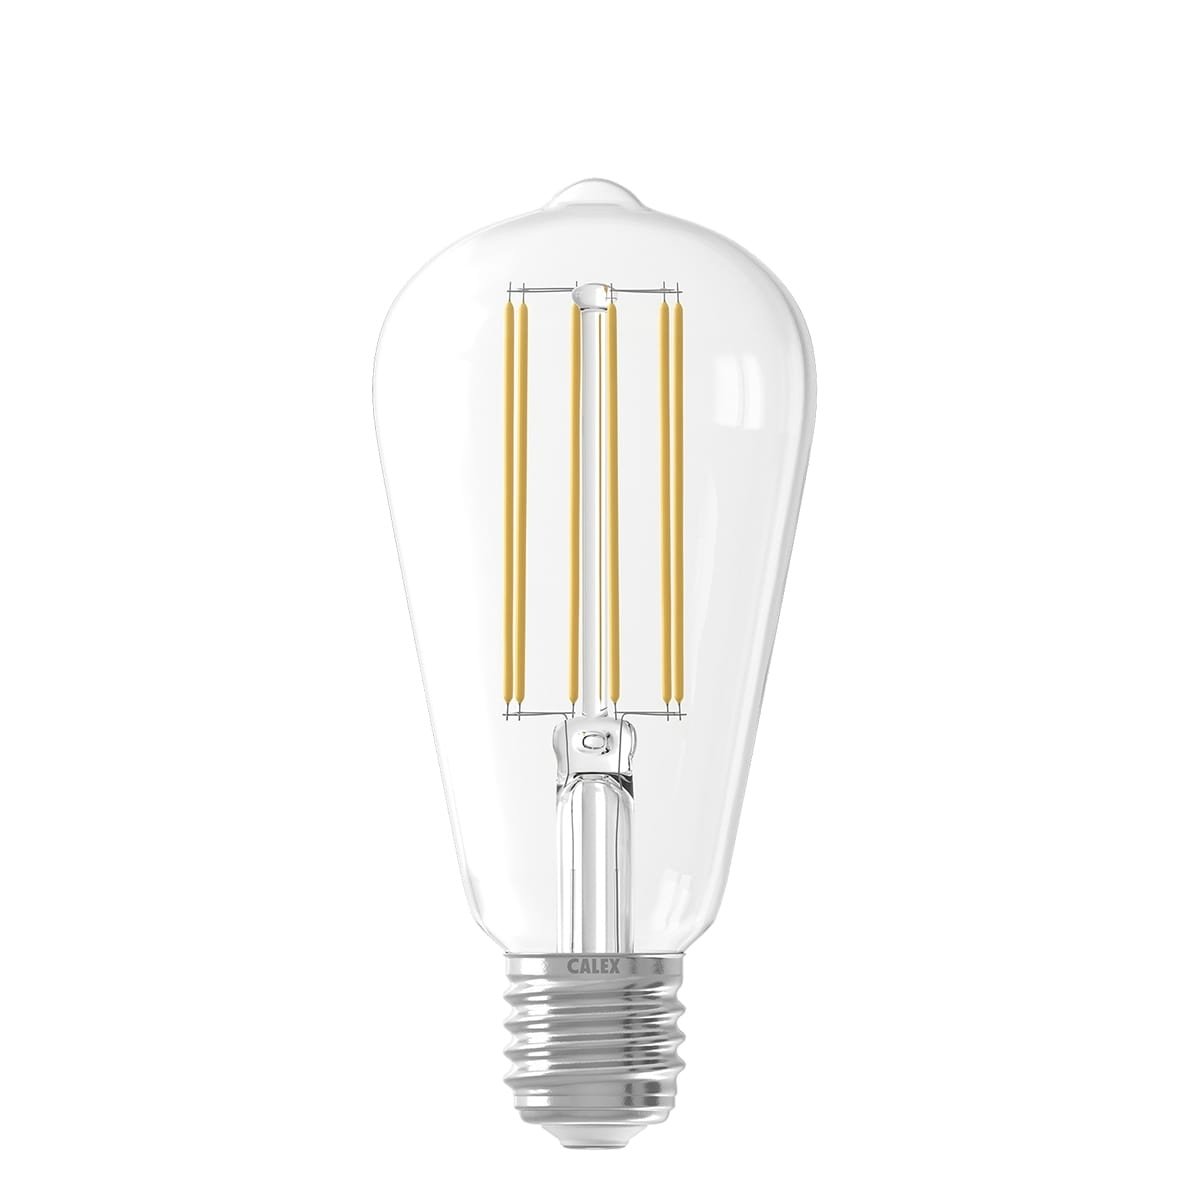 LED lampe filament Rustik Klar - 4W